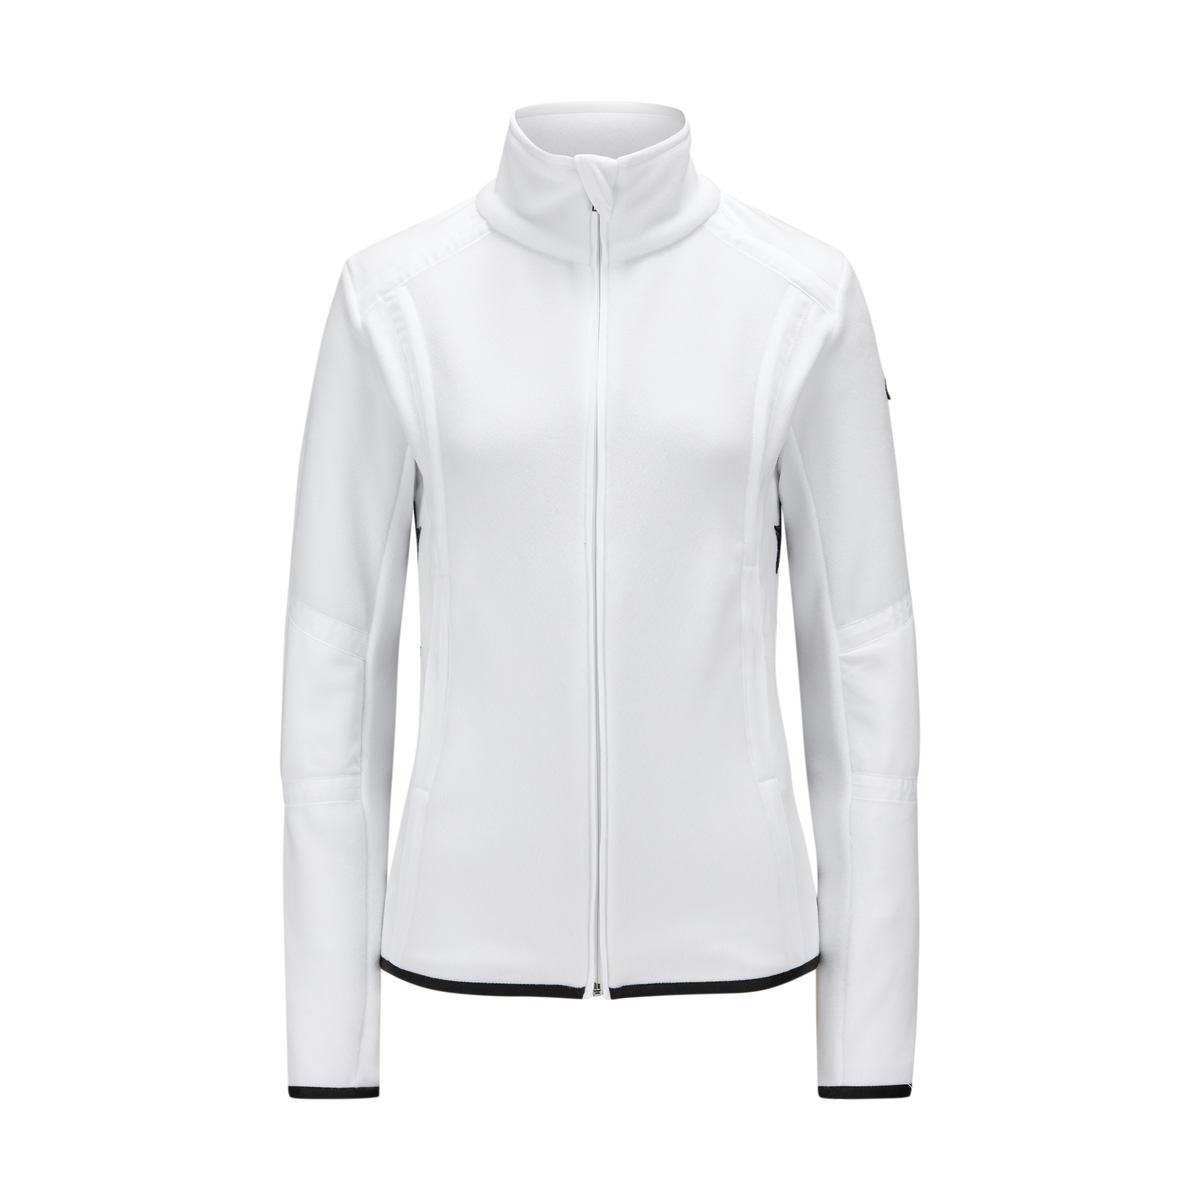 Gaastra TOPAZ - Fleece jacket - white - Zalando.de